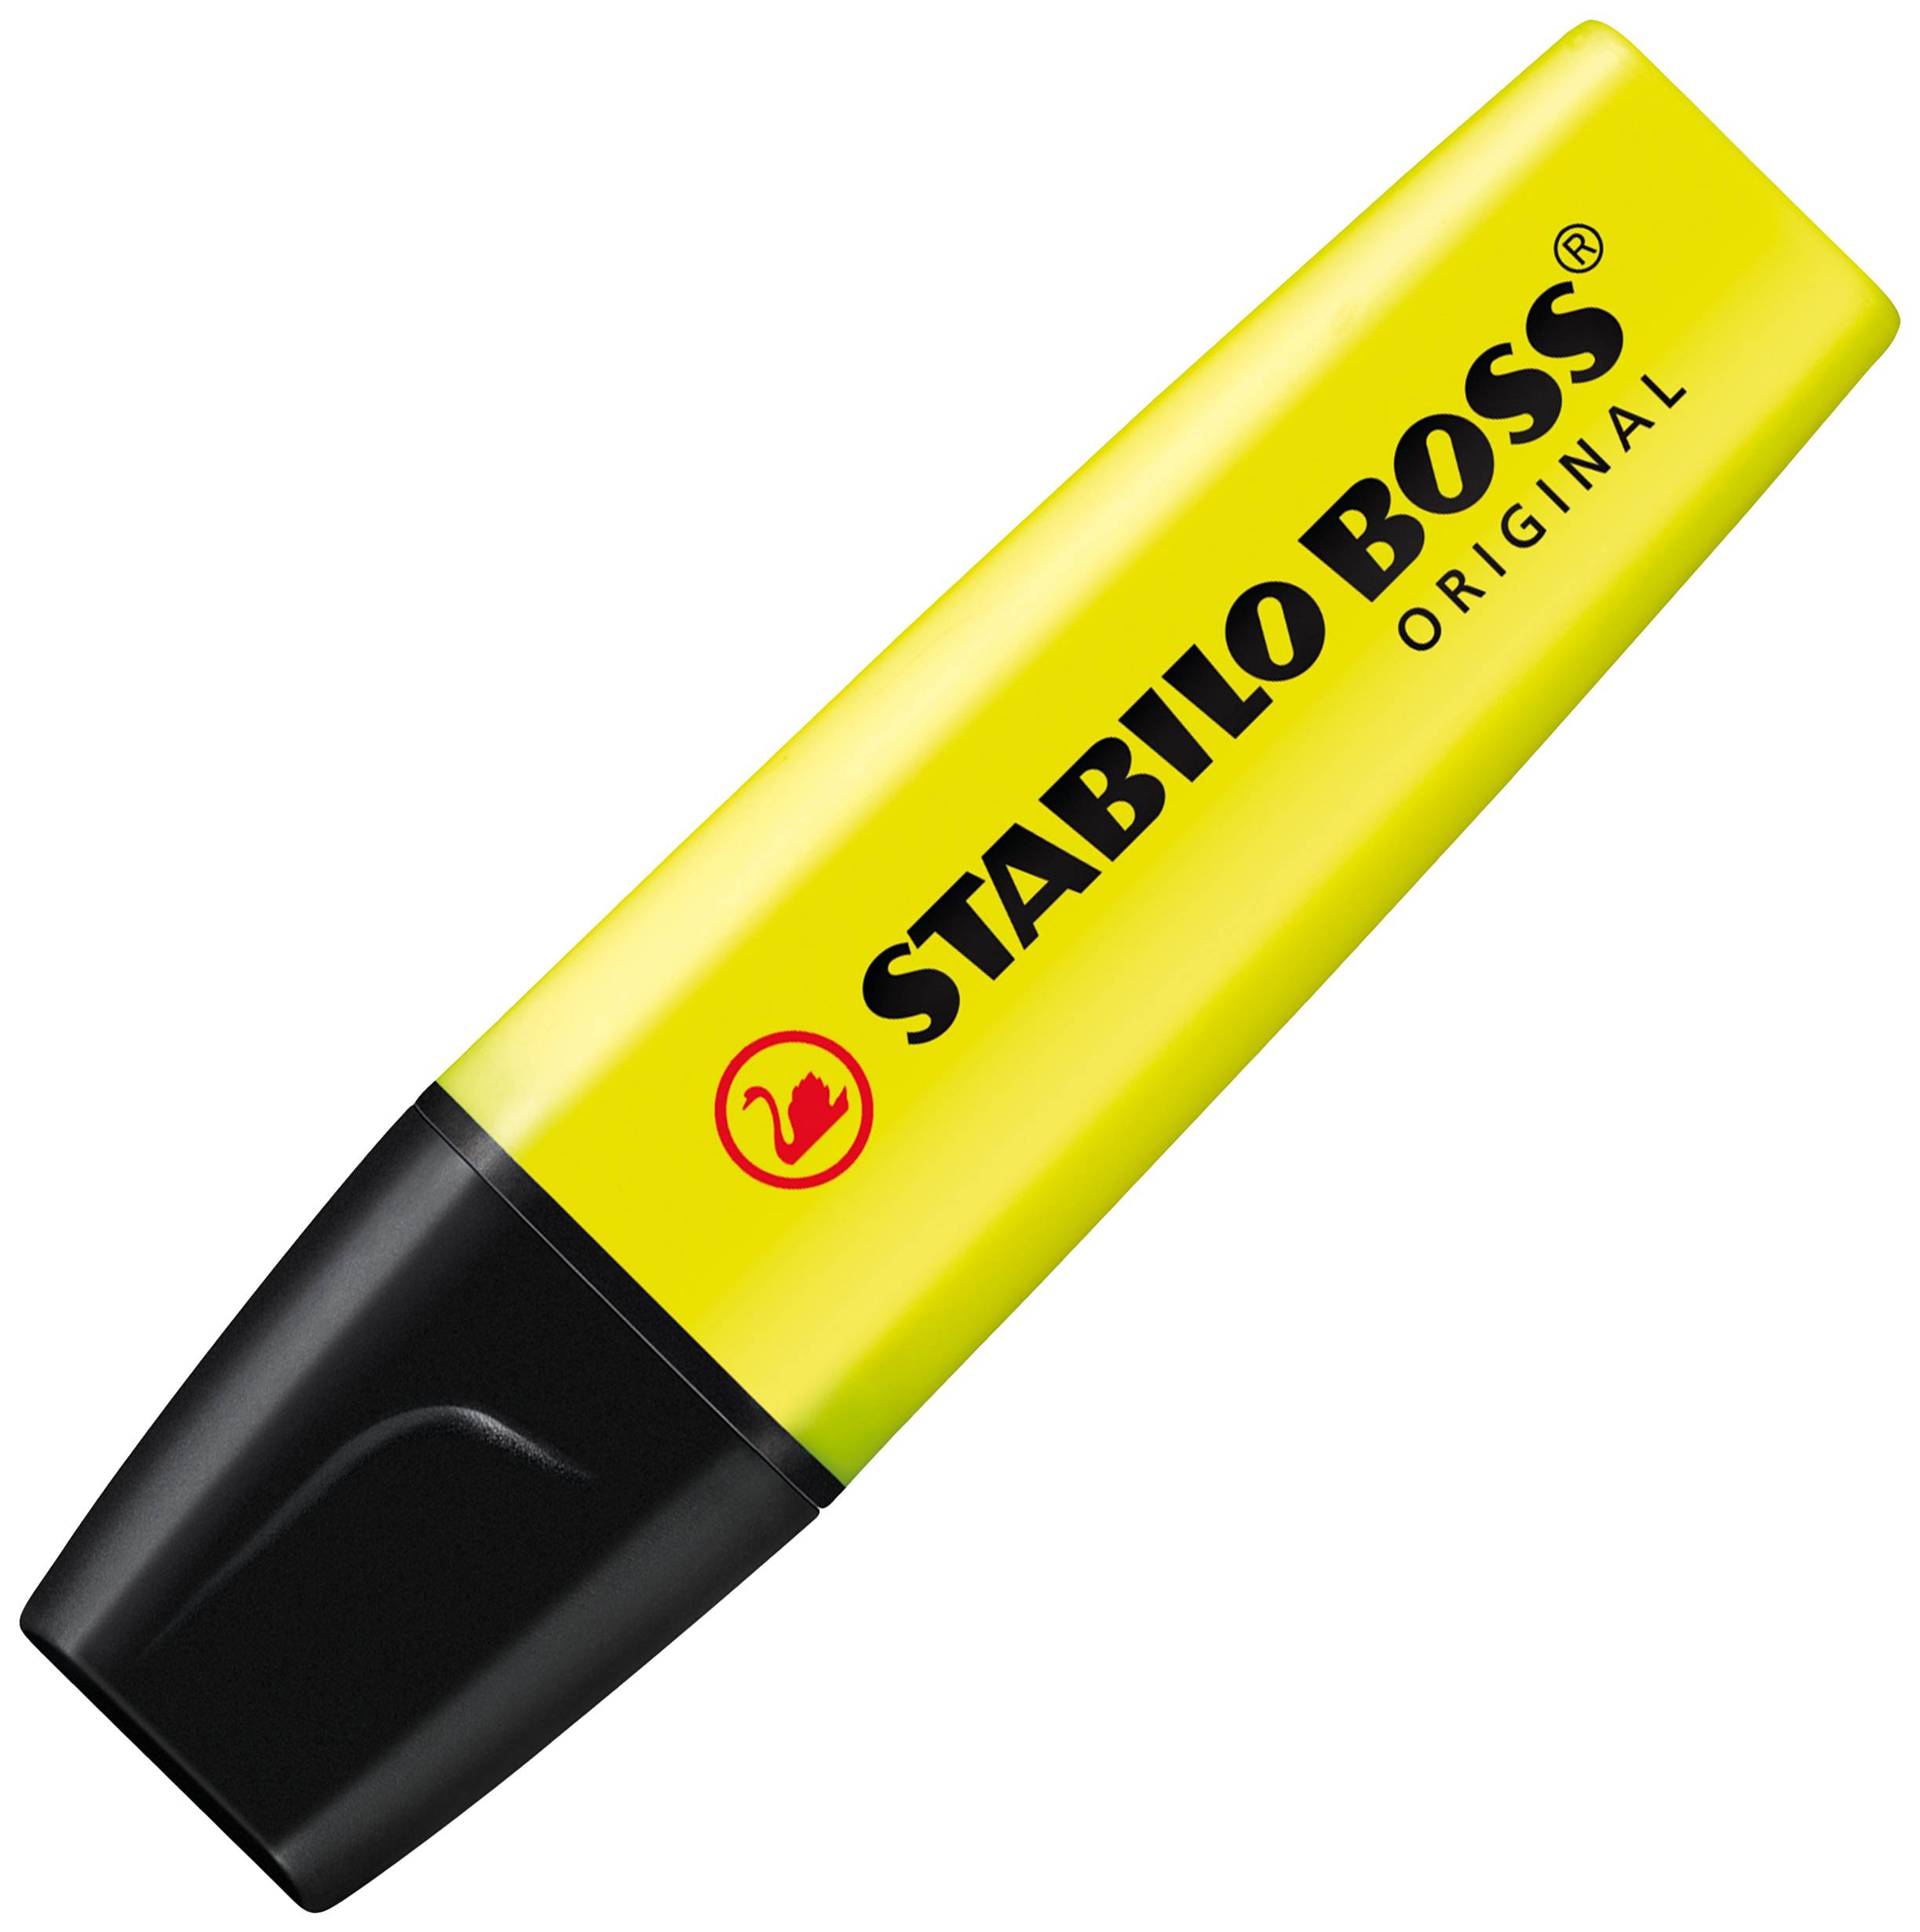 Buy STABILO Highlighter STABILO BOSS® ORIGINAL 70/24 Yellow 2 mm, 5 mm 1  pc(s)